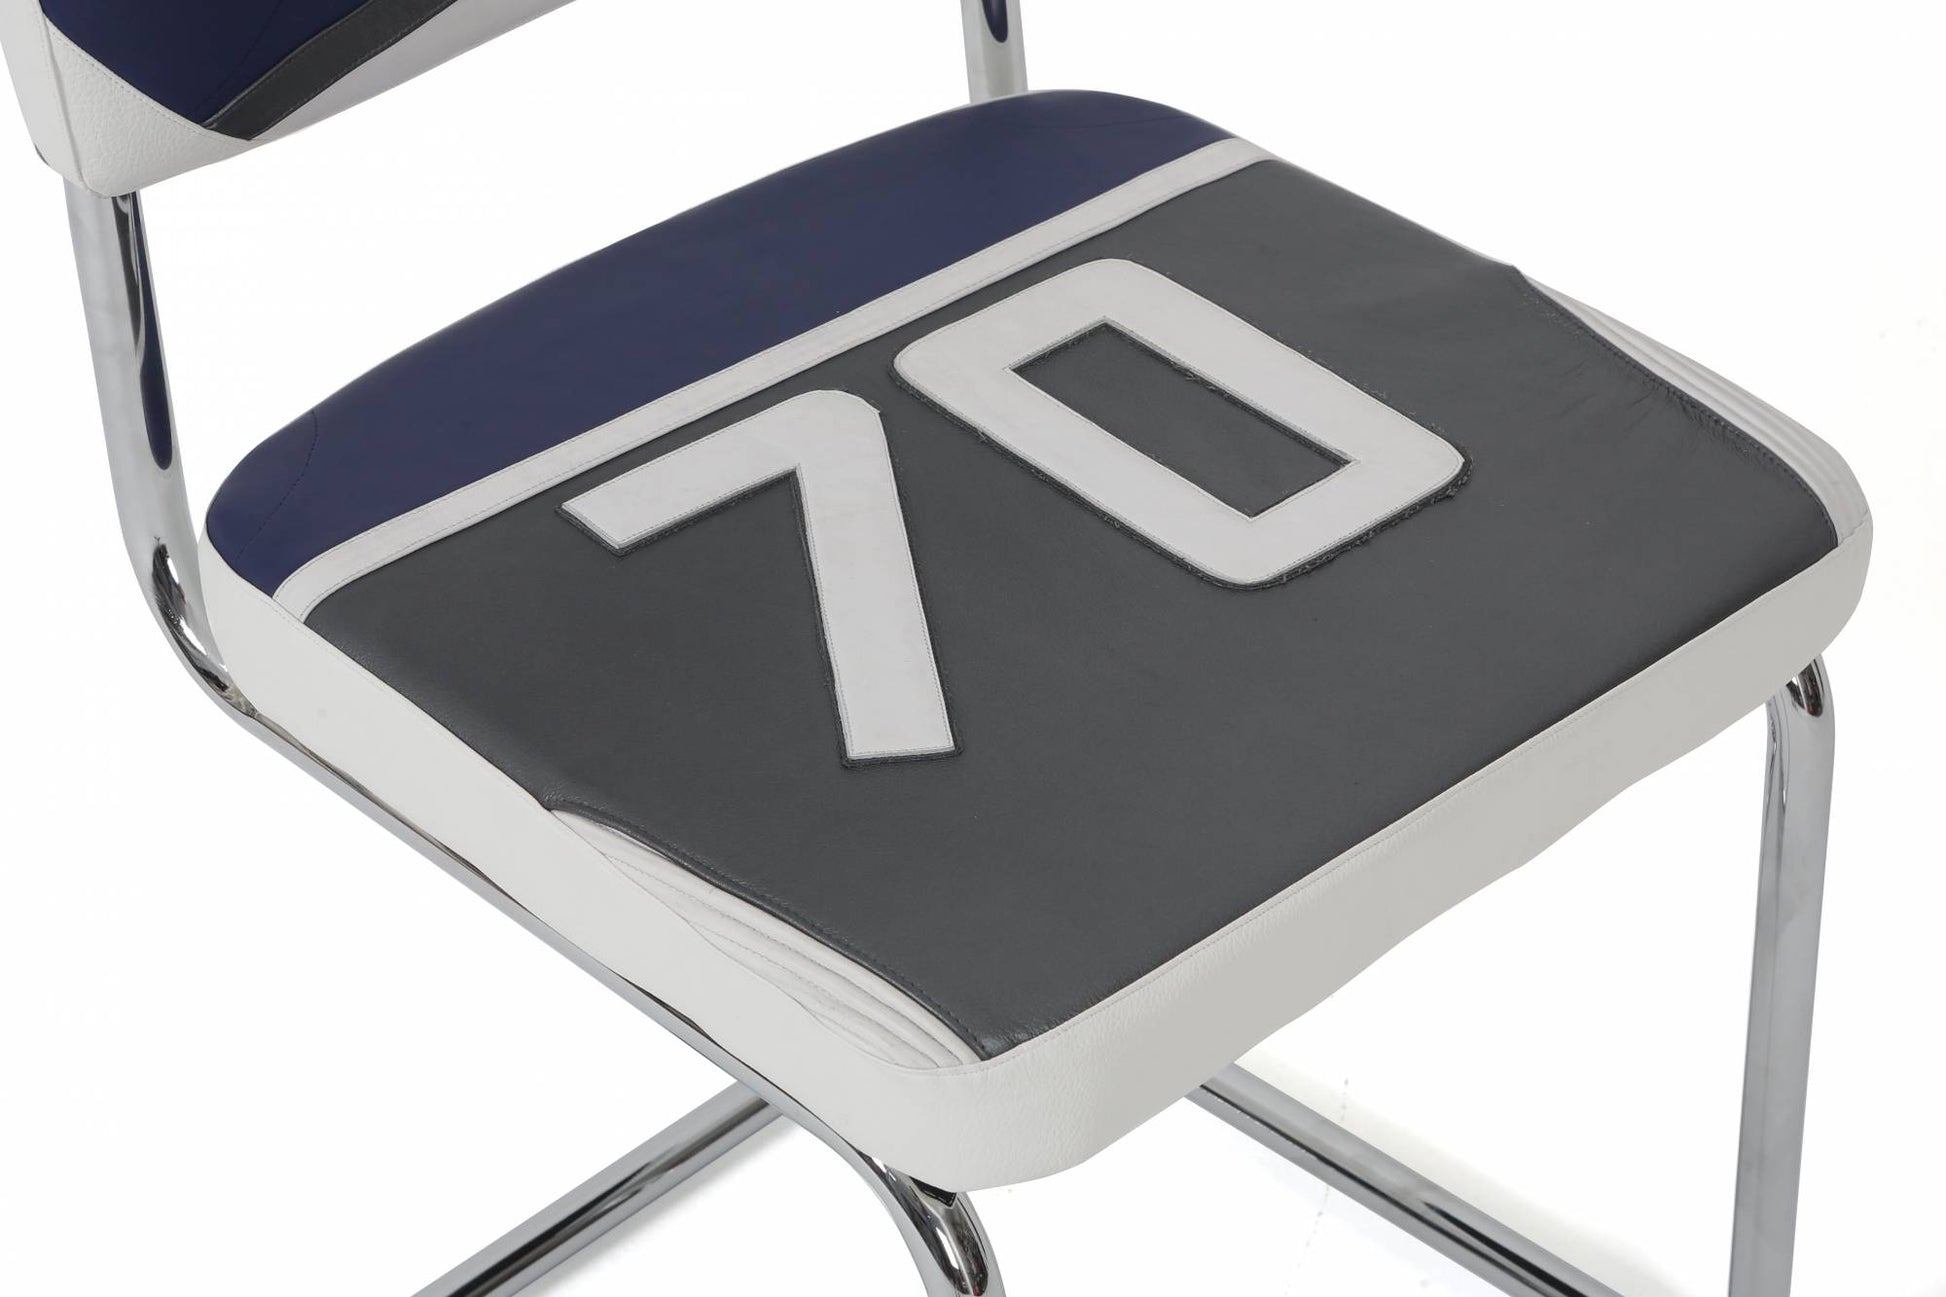 T.B.O.S Object Chair C2 Type 007 - Deconstrcuted 70 Racing Jacket Single Chair - Yoon Kyeong deok / T.B.O.S - CAVA LIFE